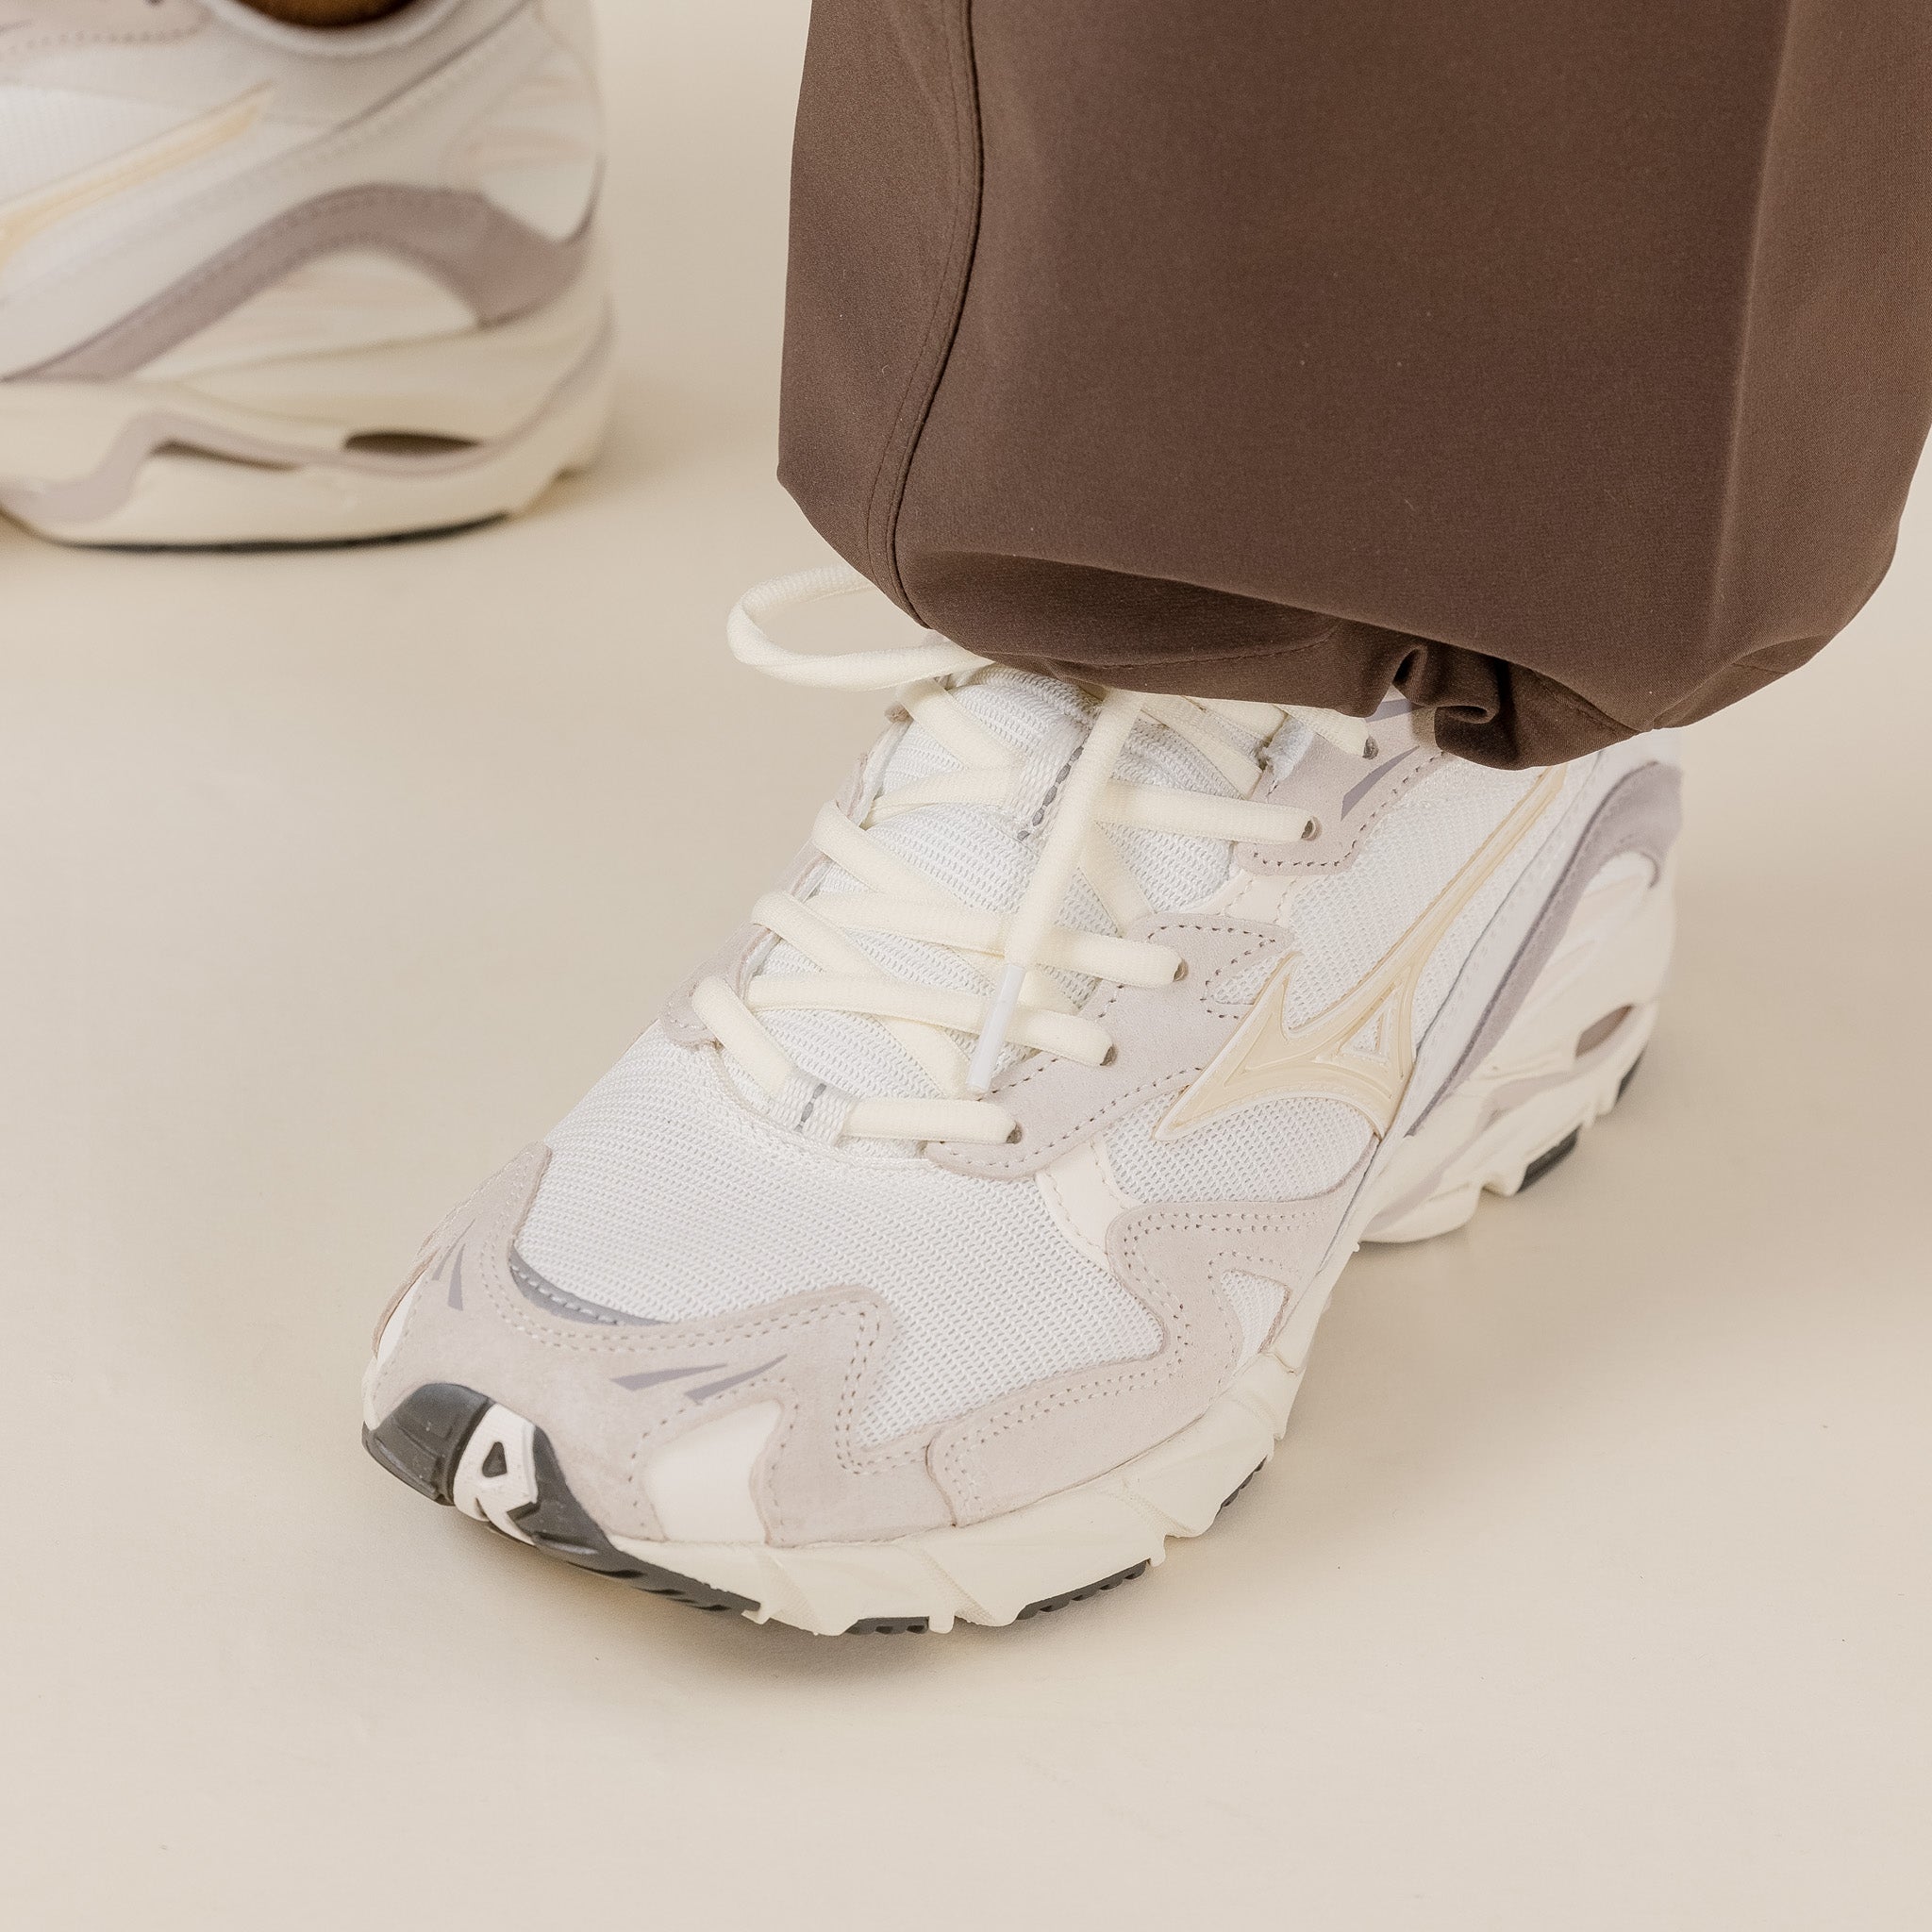 WAVE RIDER 10 PREMIUM - White | Sneakers | Mizuno UK